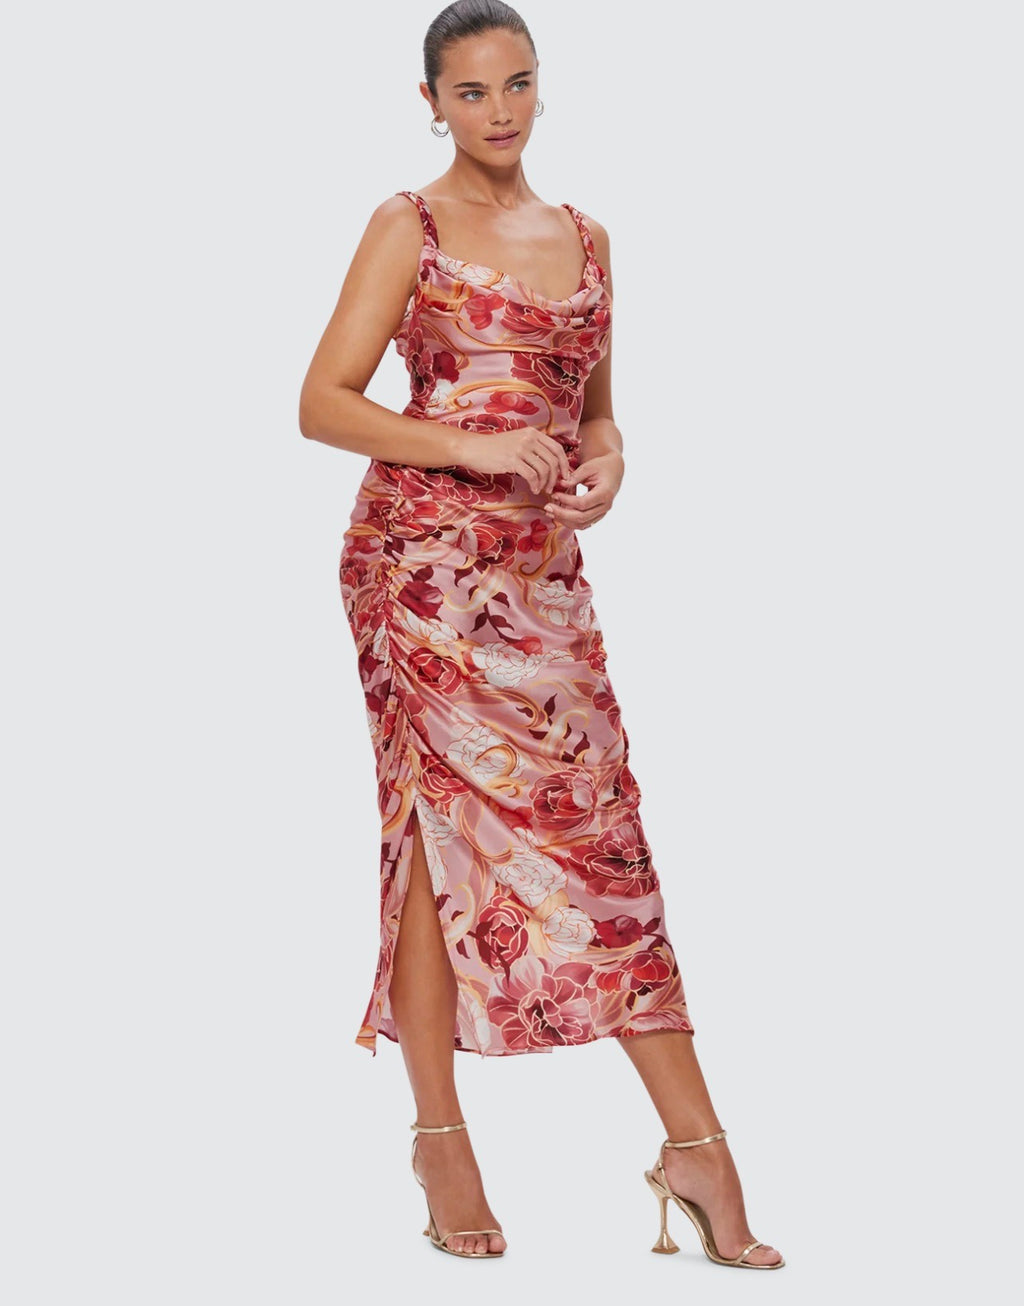 Leo Lin Rachel Cowl Neck Slip Dress - Adorn Print